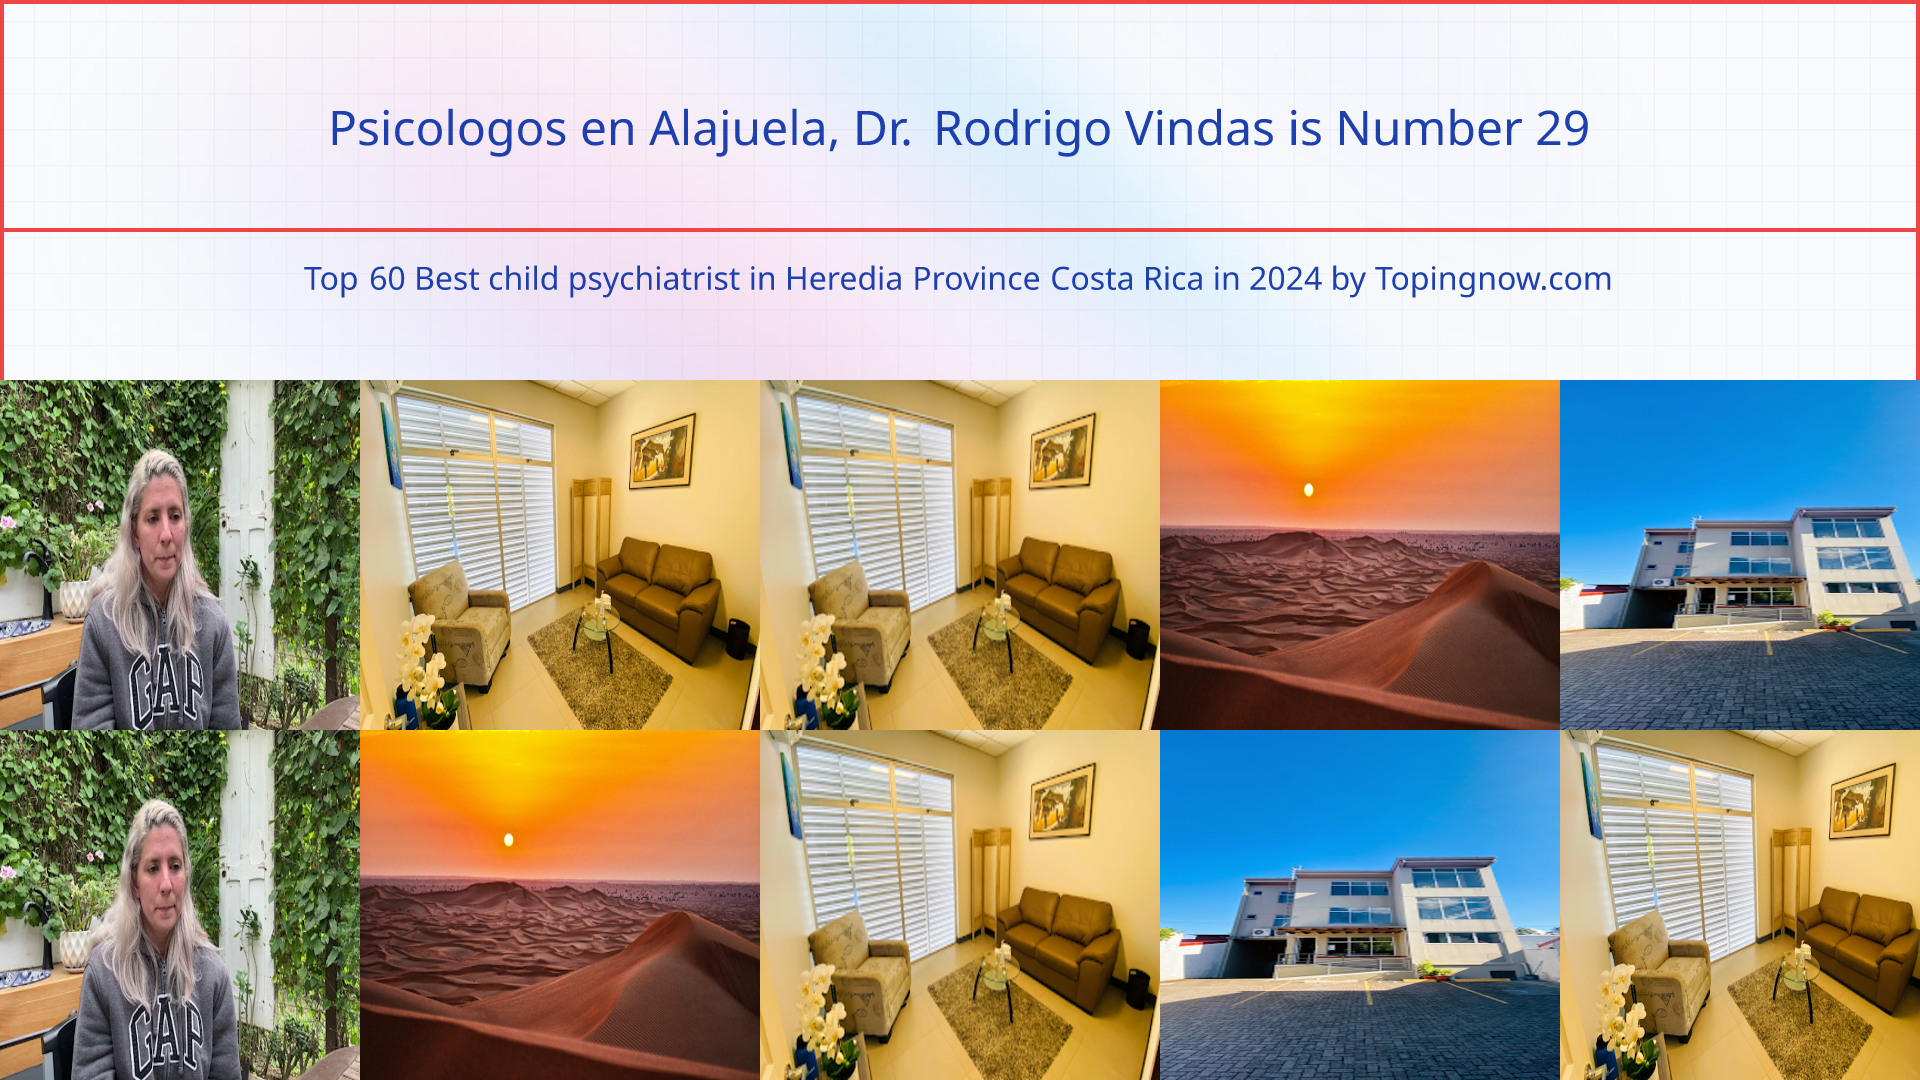 Psicologos en Alajuela, Dr. Rodrigo Vindas: Top 60 Best child psychiatrist in Heredia Province Costa Rica in 2024